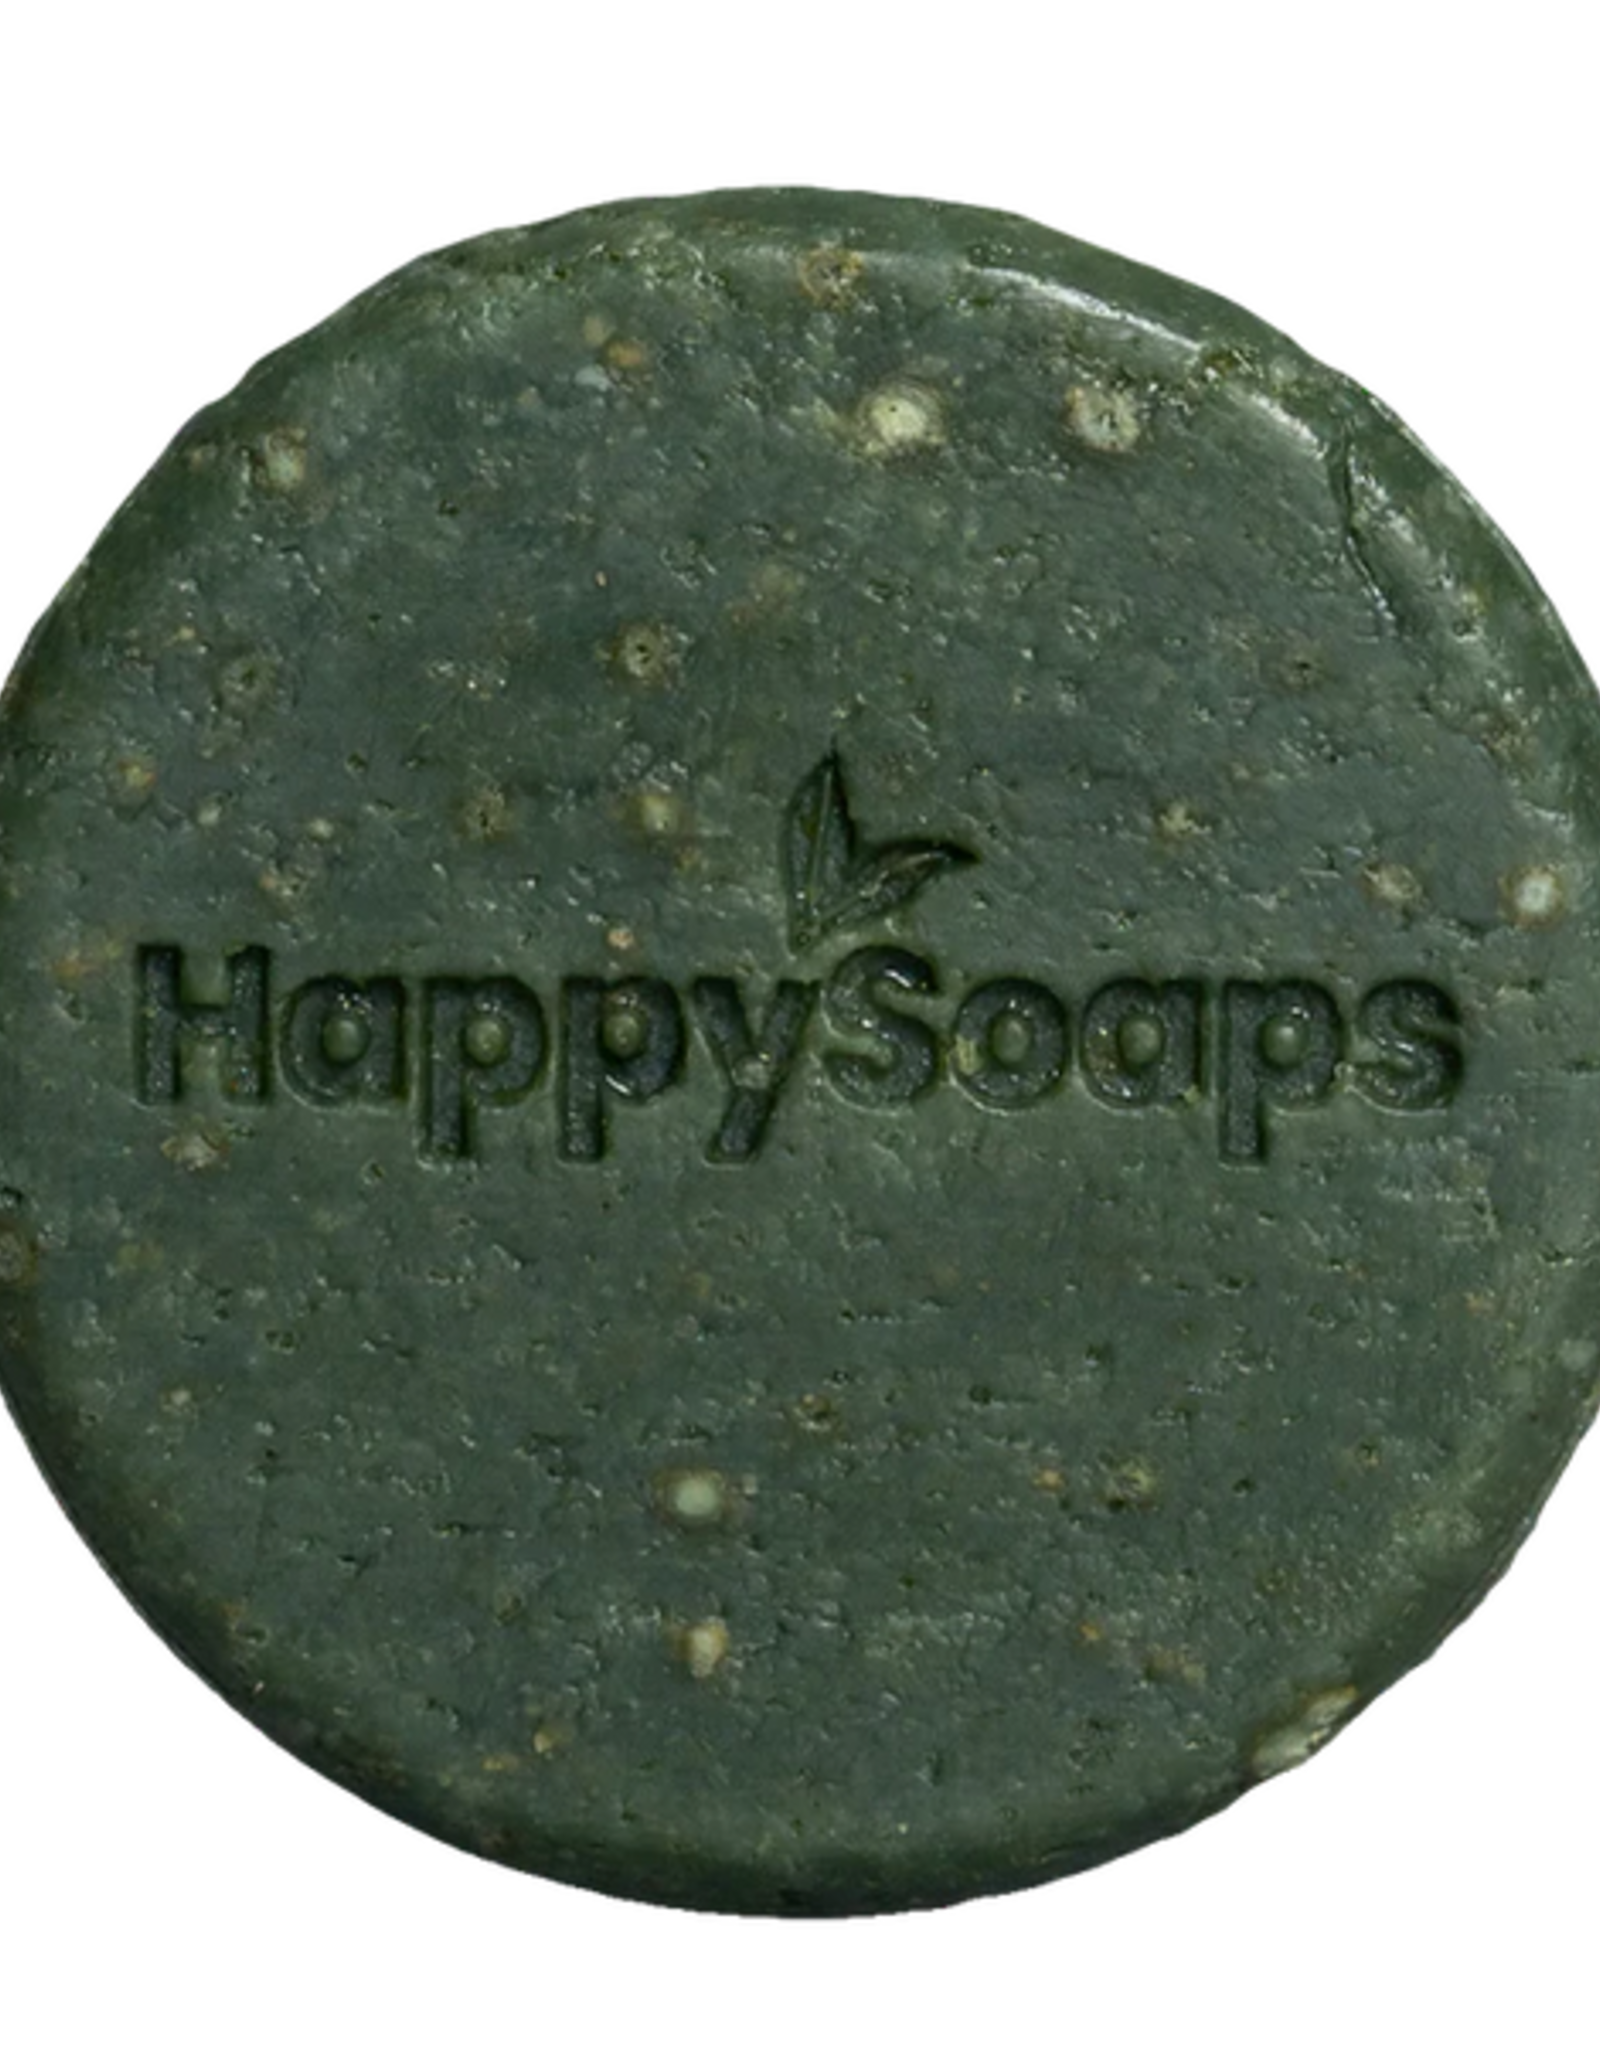 Happy Soaps Limited Edition Shampoo Bar - Cozy Apple & Cinnamon 70g